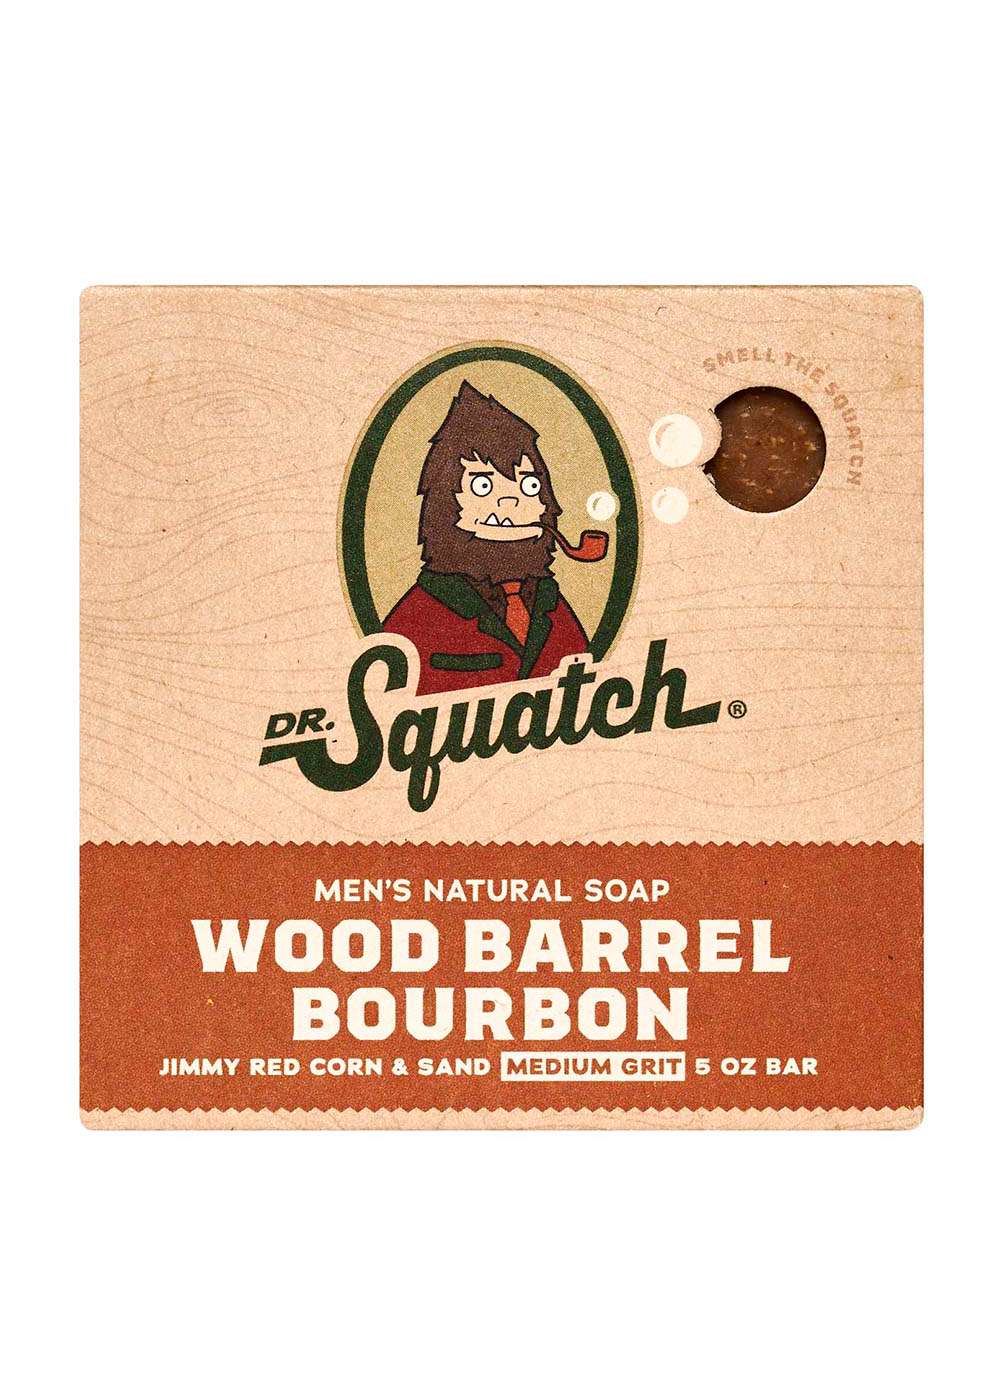 Dr. Squatch Men's Natural Soap Bar - Wood Barrel Bourbon; image 1 of 7